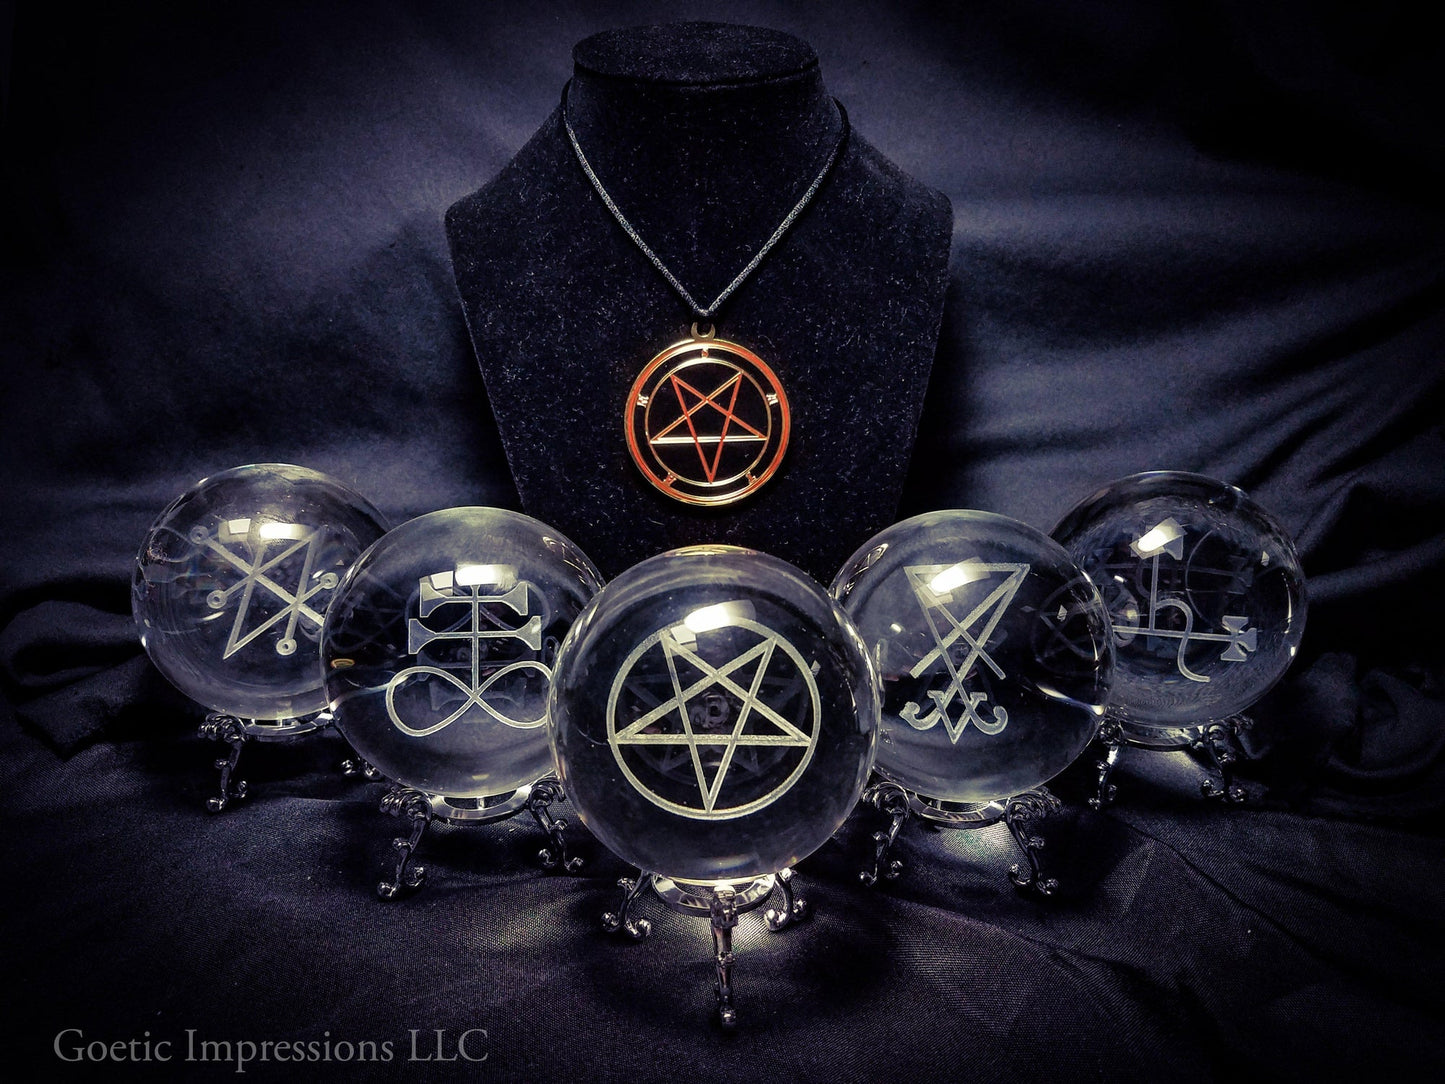 Occult symbols engraved in crystal balls